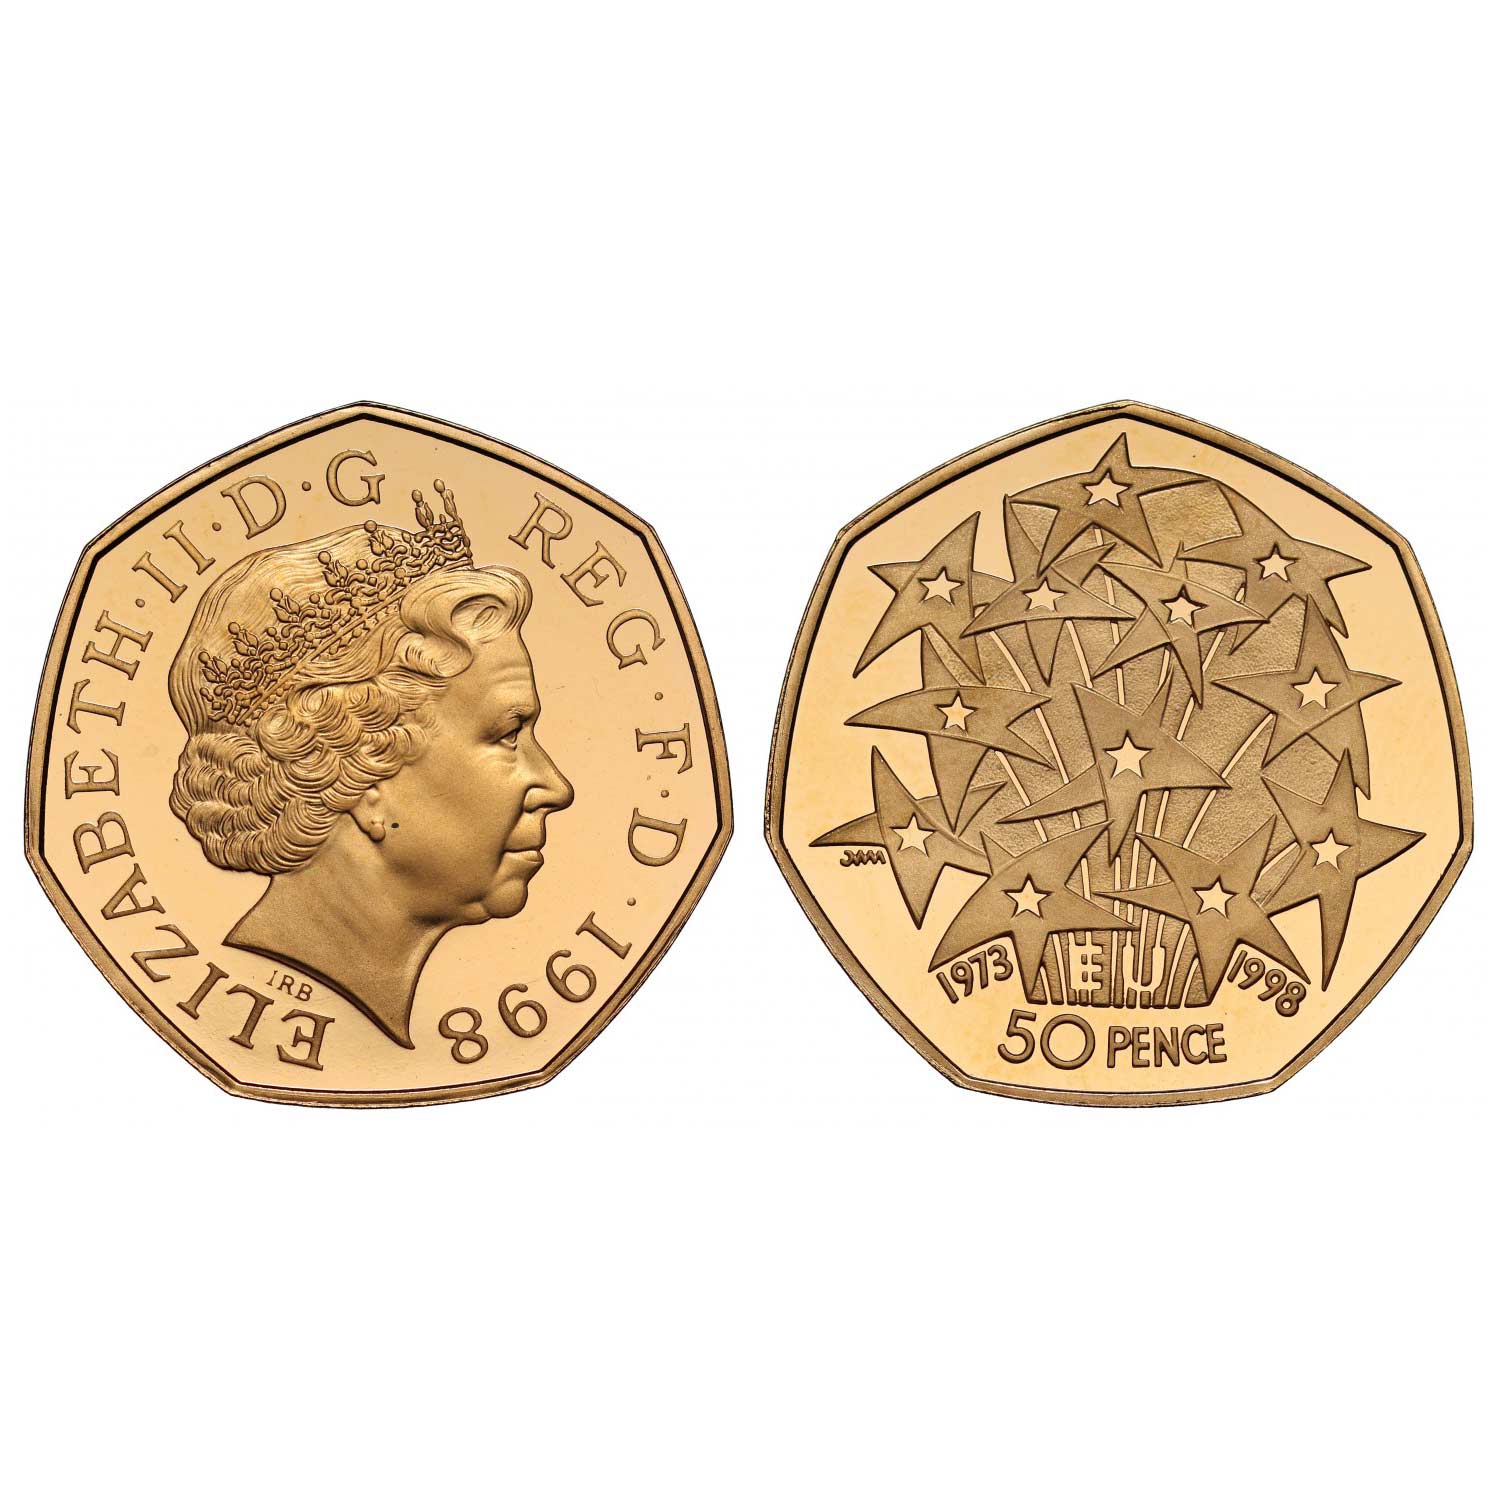 1998 EU Membership 25th Anniversary UK 50 Pence Gold Coin